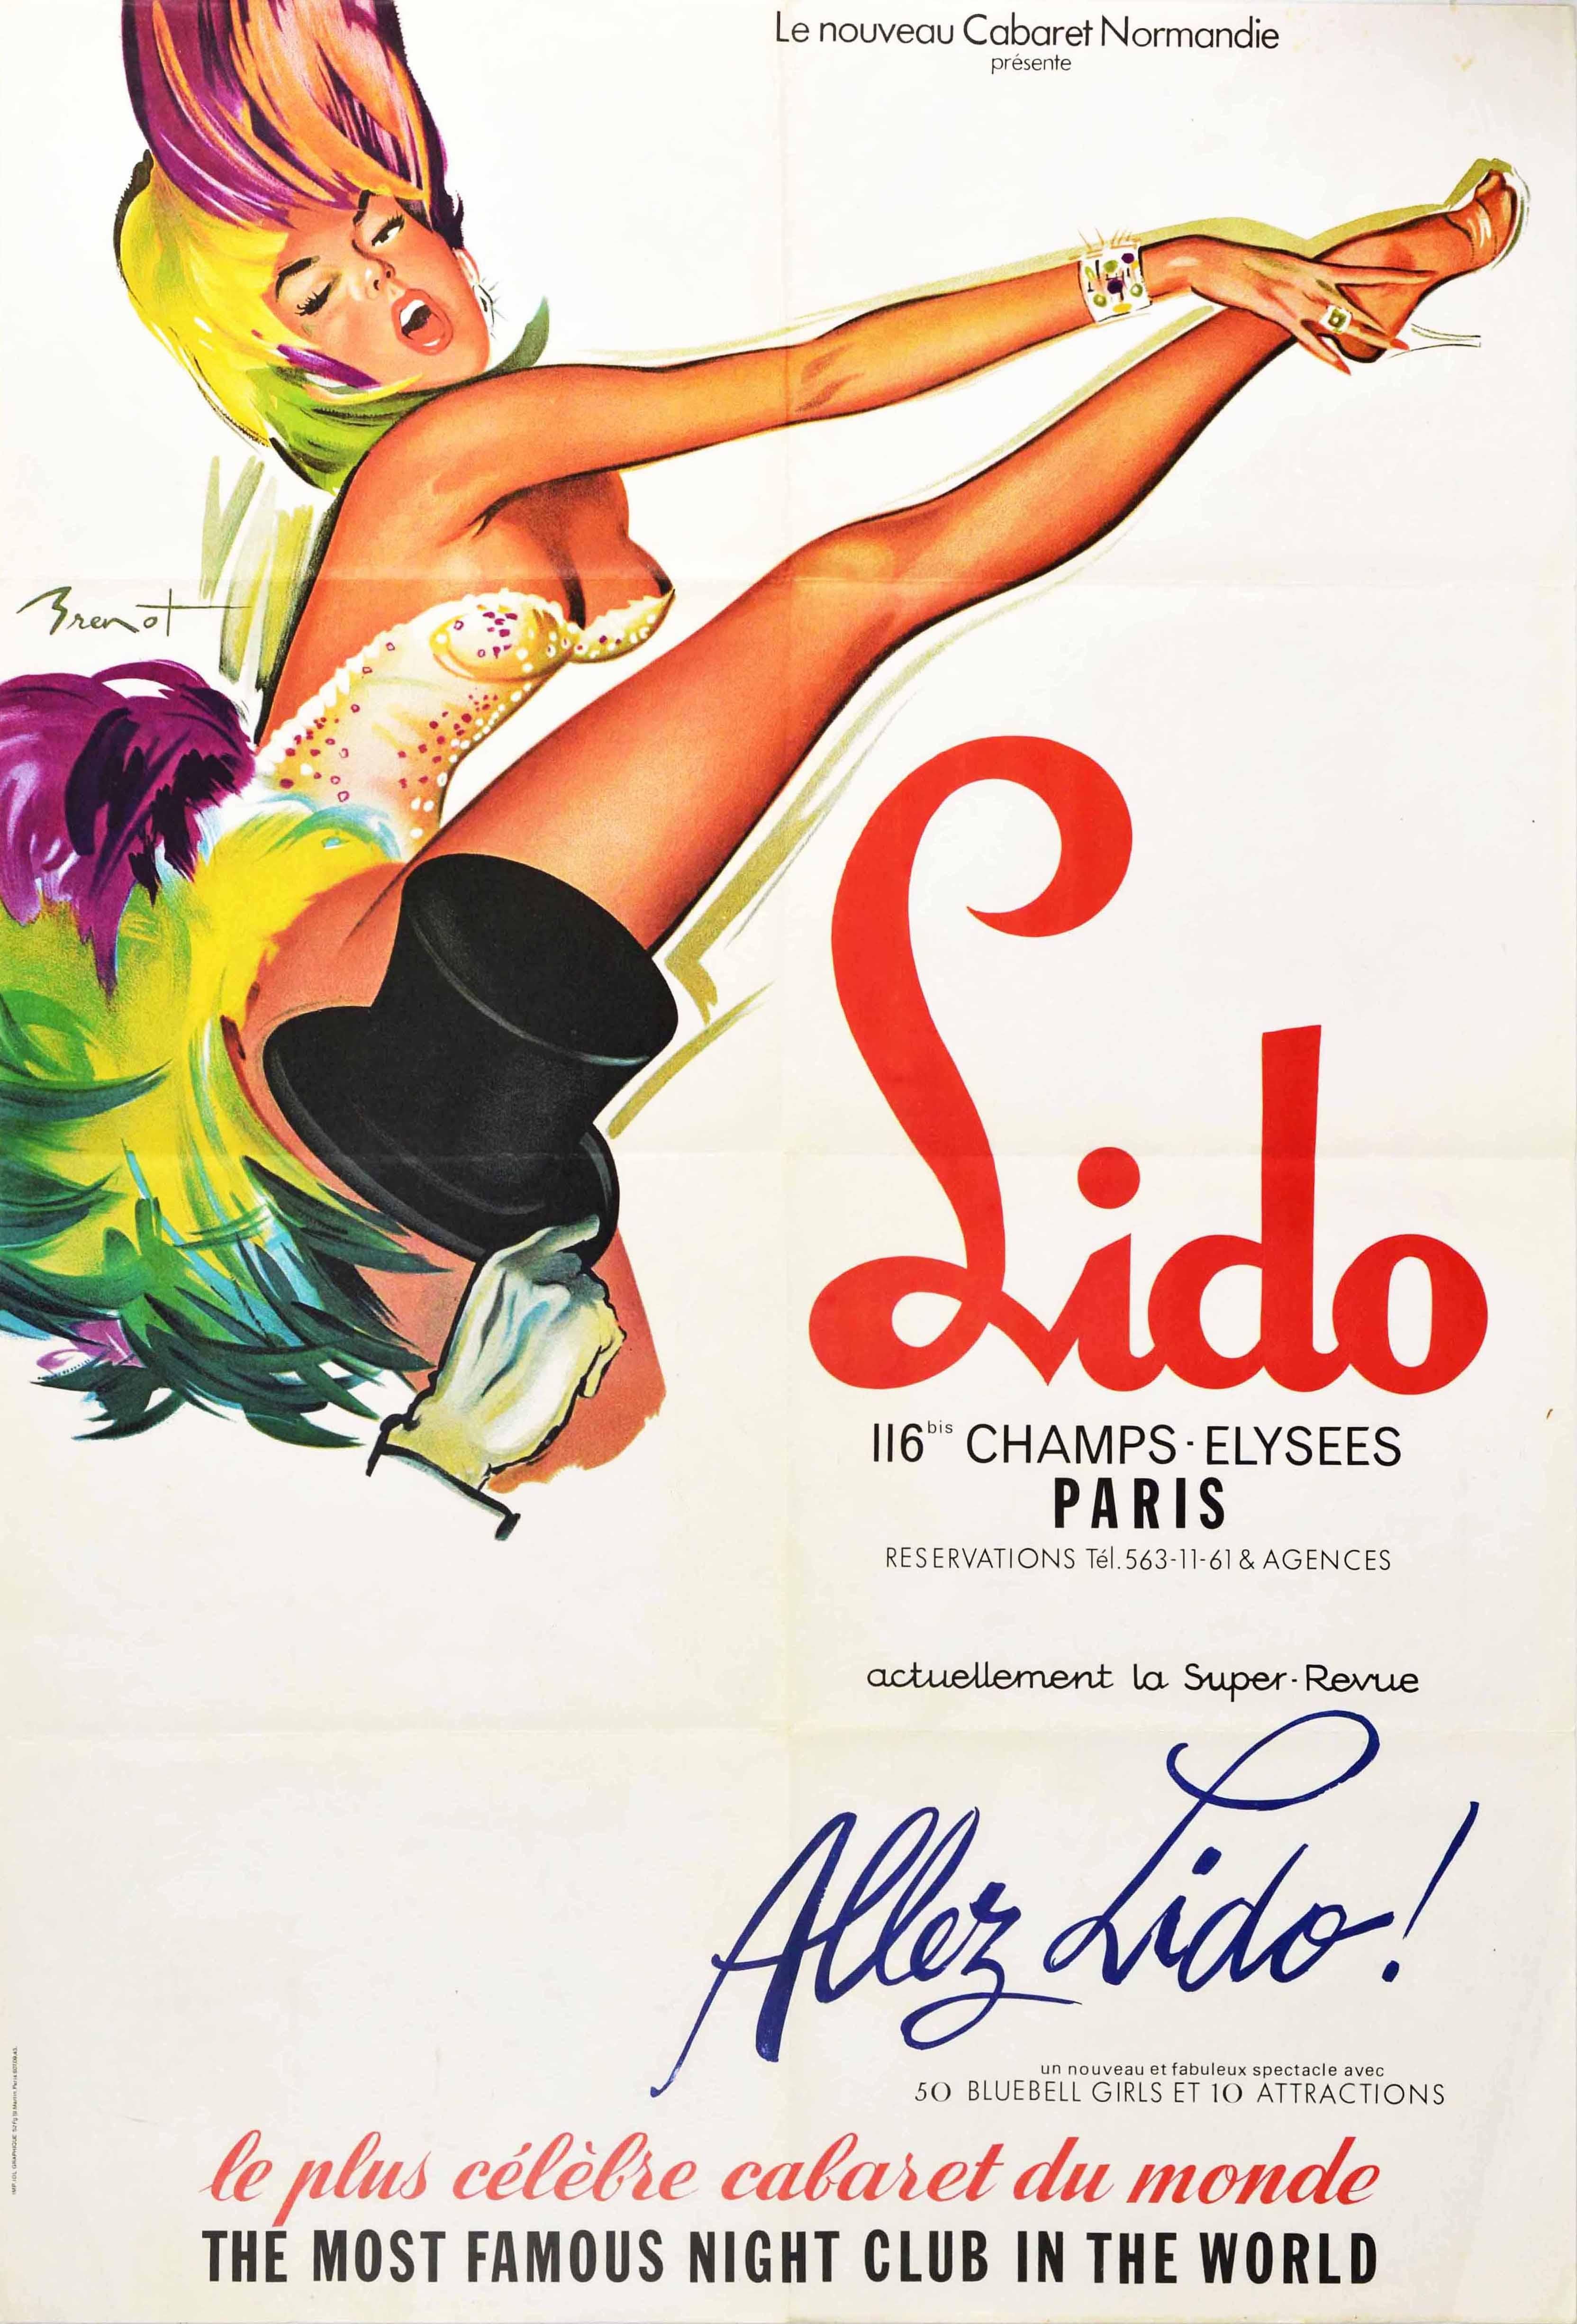 Pierre Brenot Print - Original Vintage Poster Lido Paris Cabaret Bluebell Girls Pin Up Champs Elysees